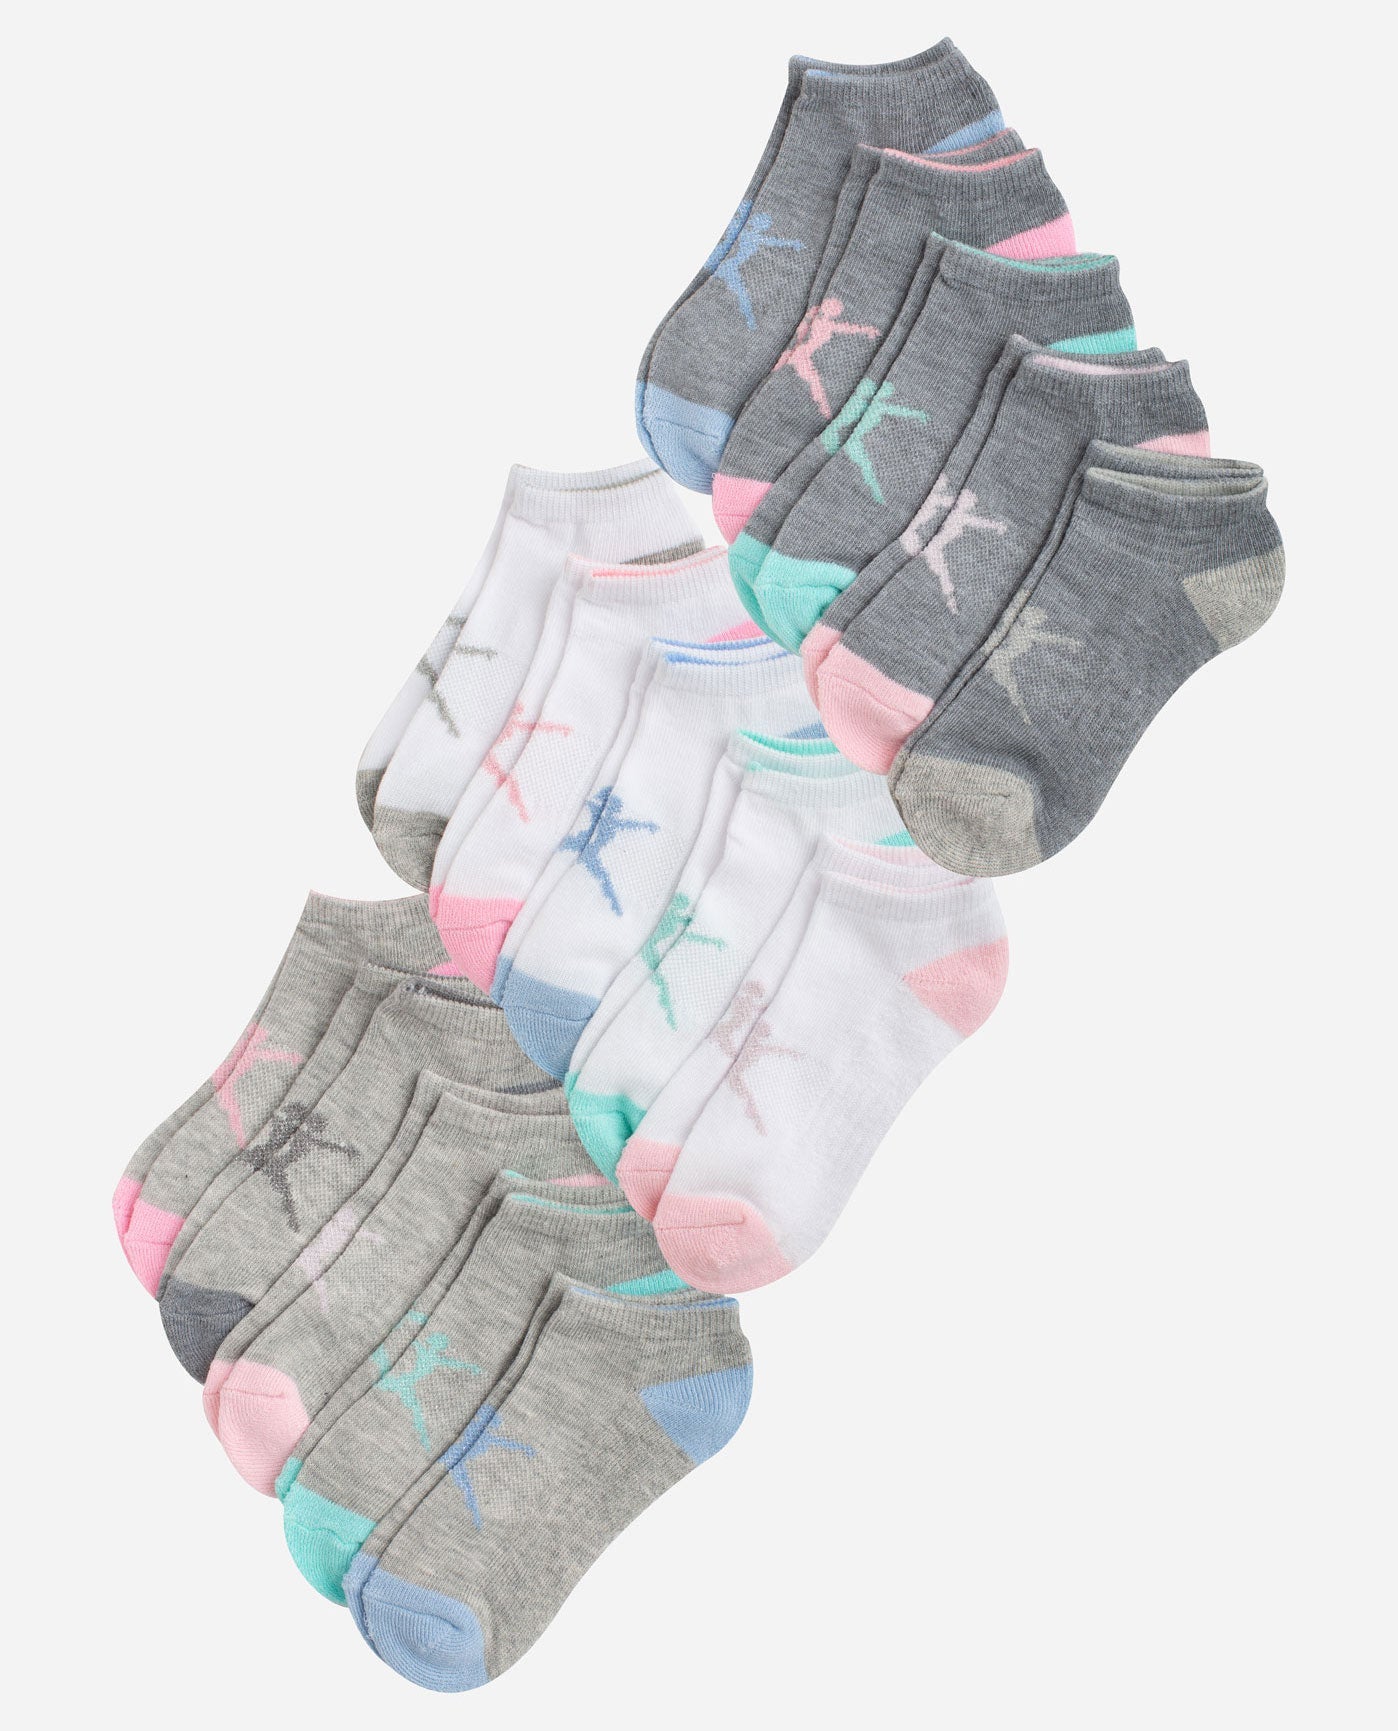 Half Socks, No-Show Half Socks for Women